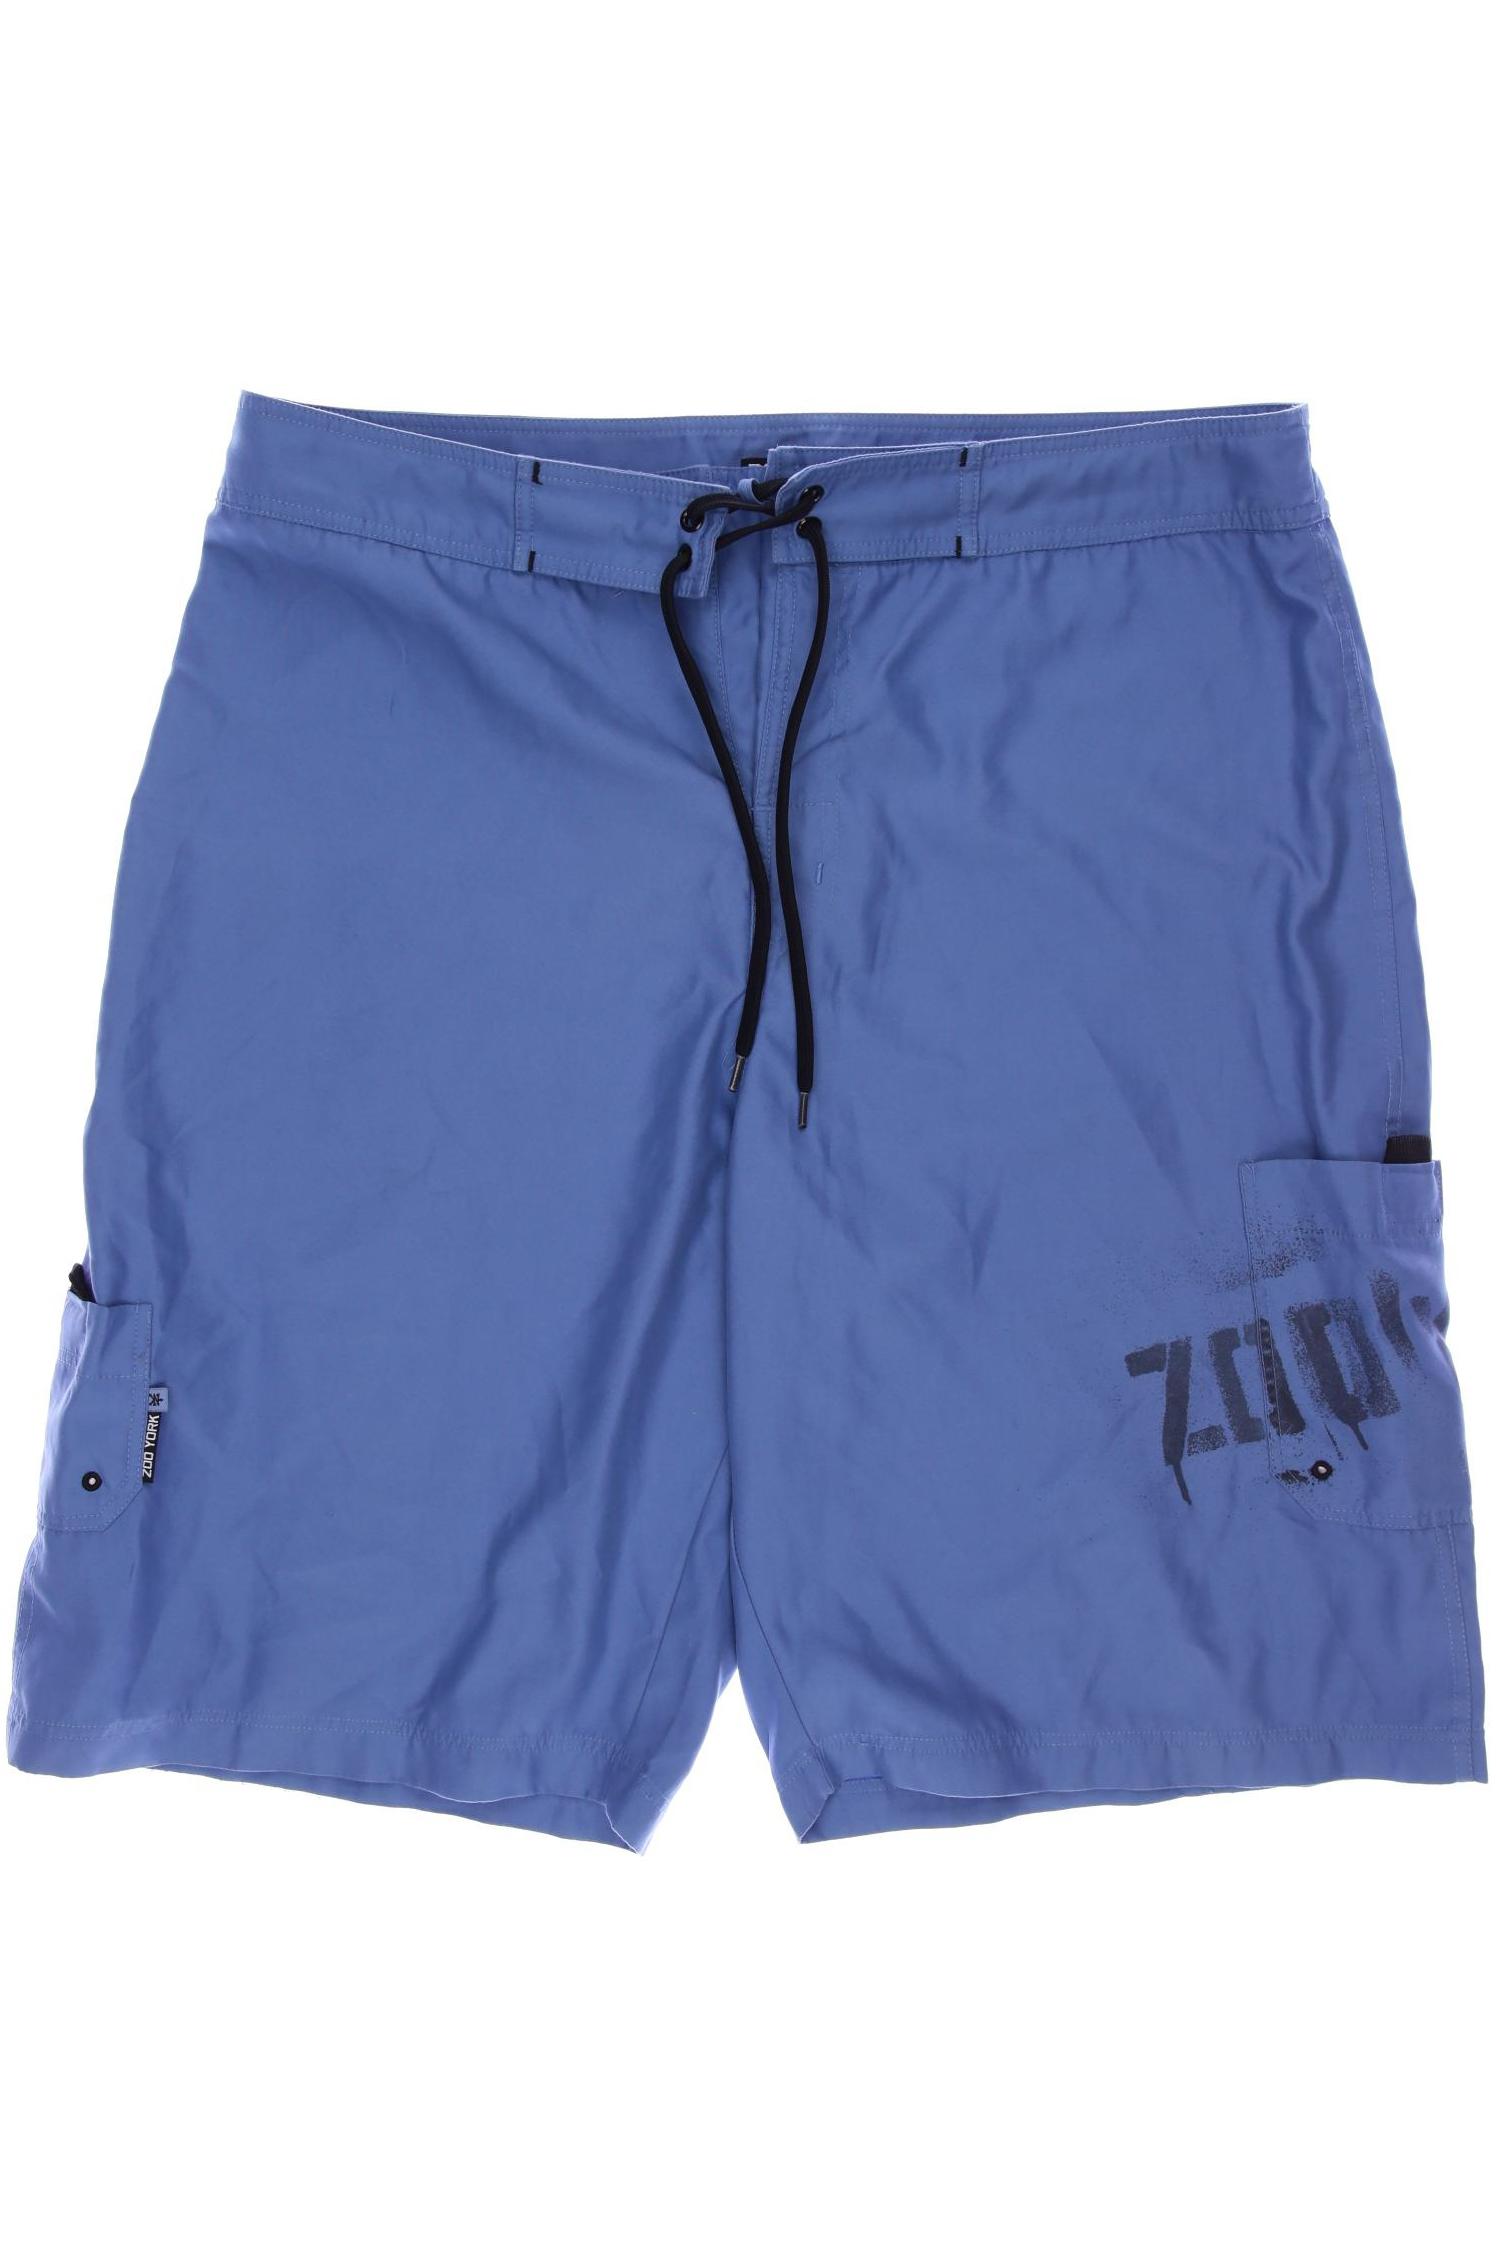 Zoo York Herren Shorts, blau von ZOO YORK